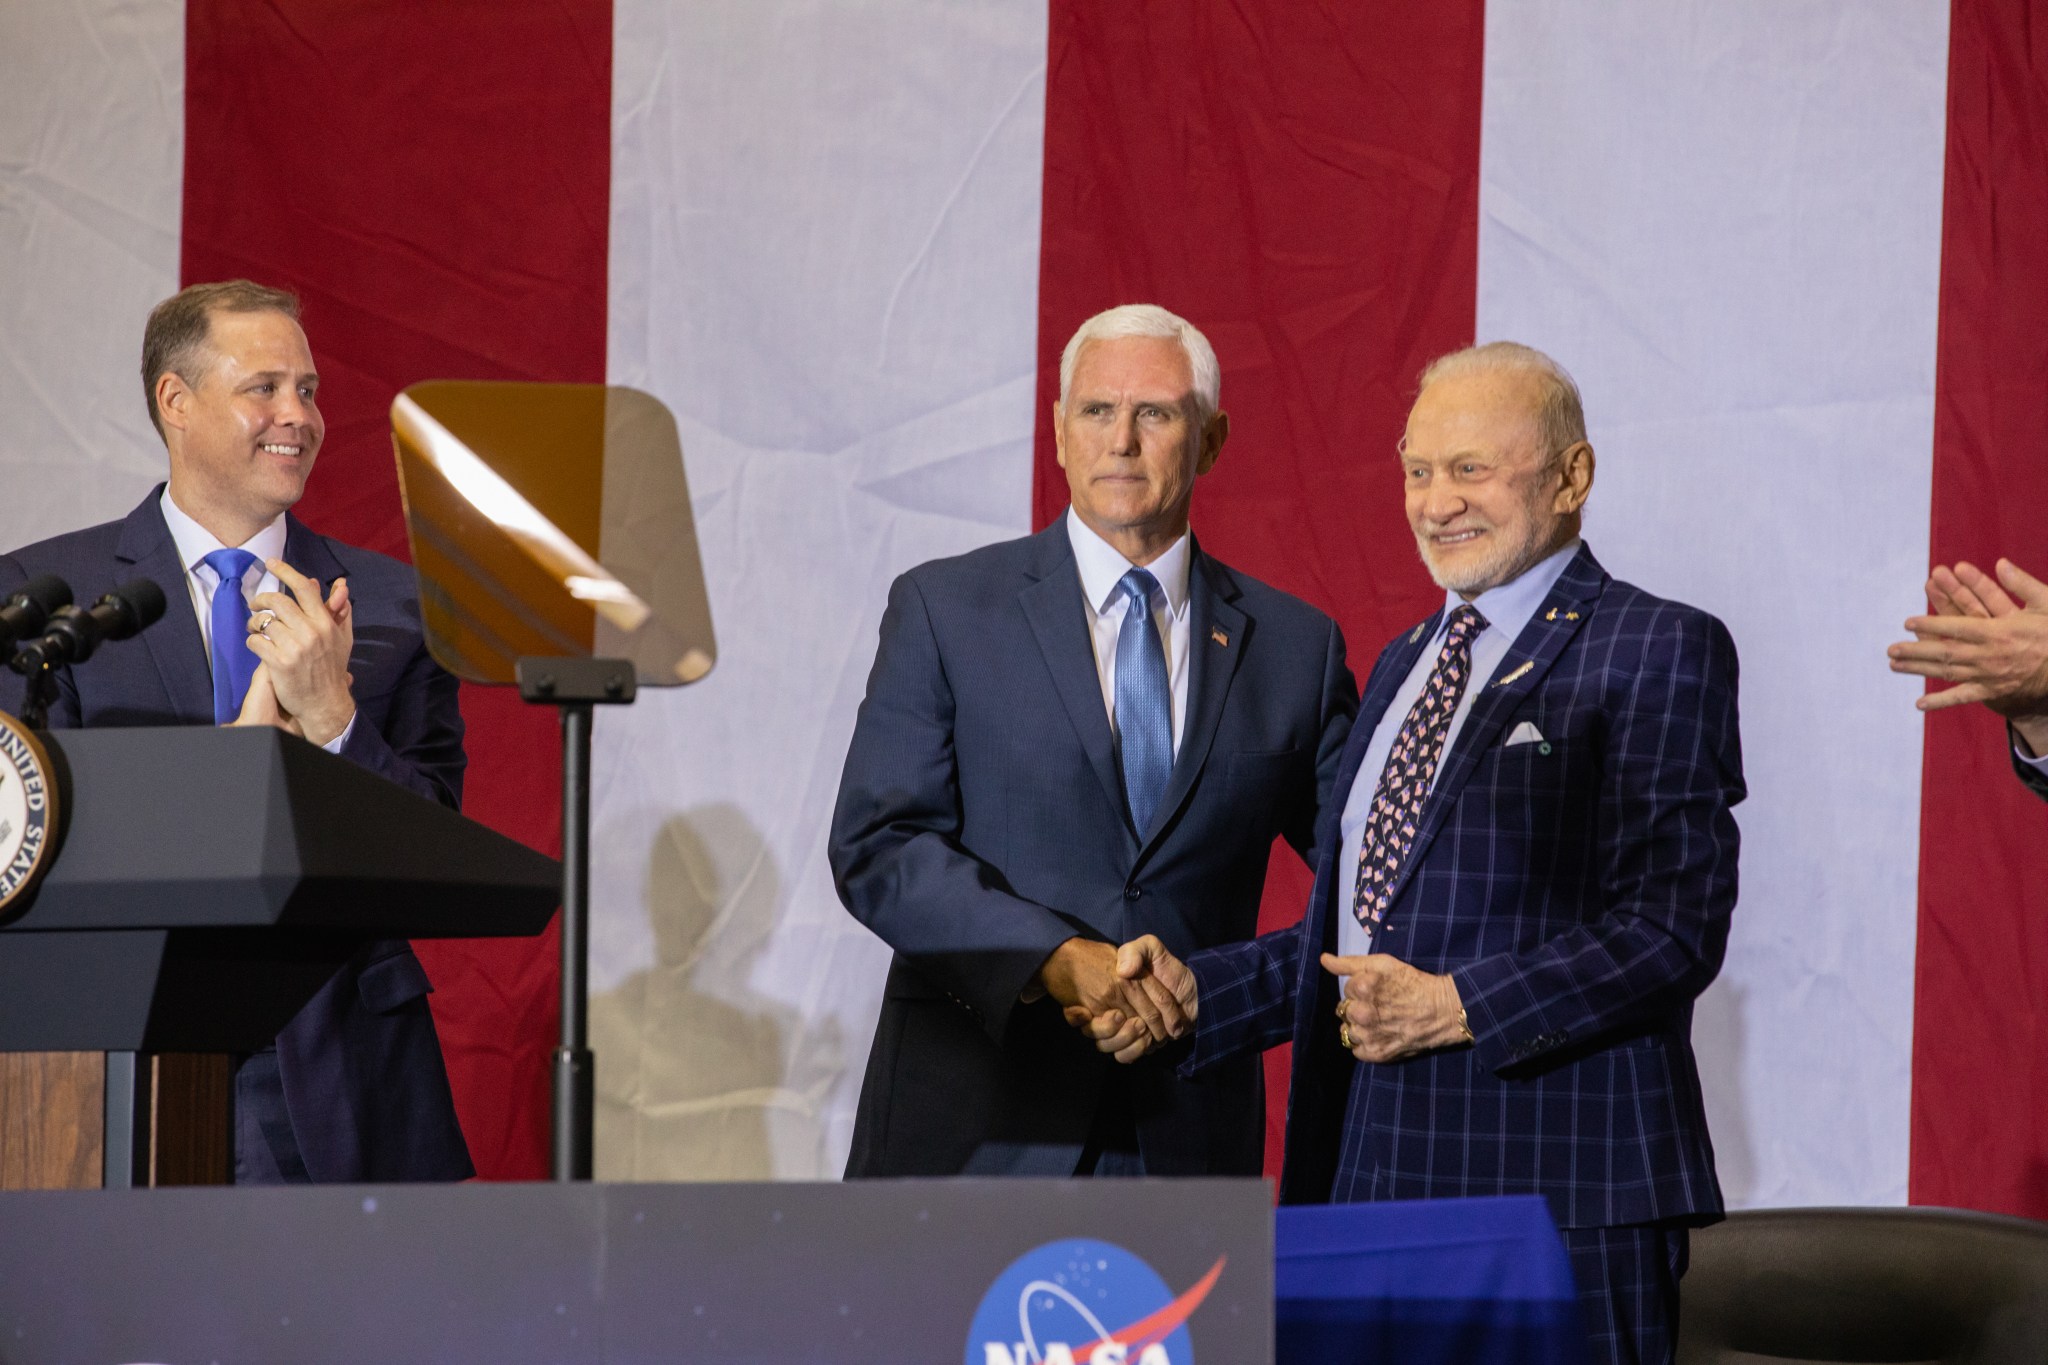 Vice President Mike Pence with NASA Administrator Jim Bridenstine and Apollo 11 astronaut Buzz Aldrin